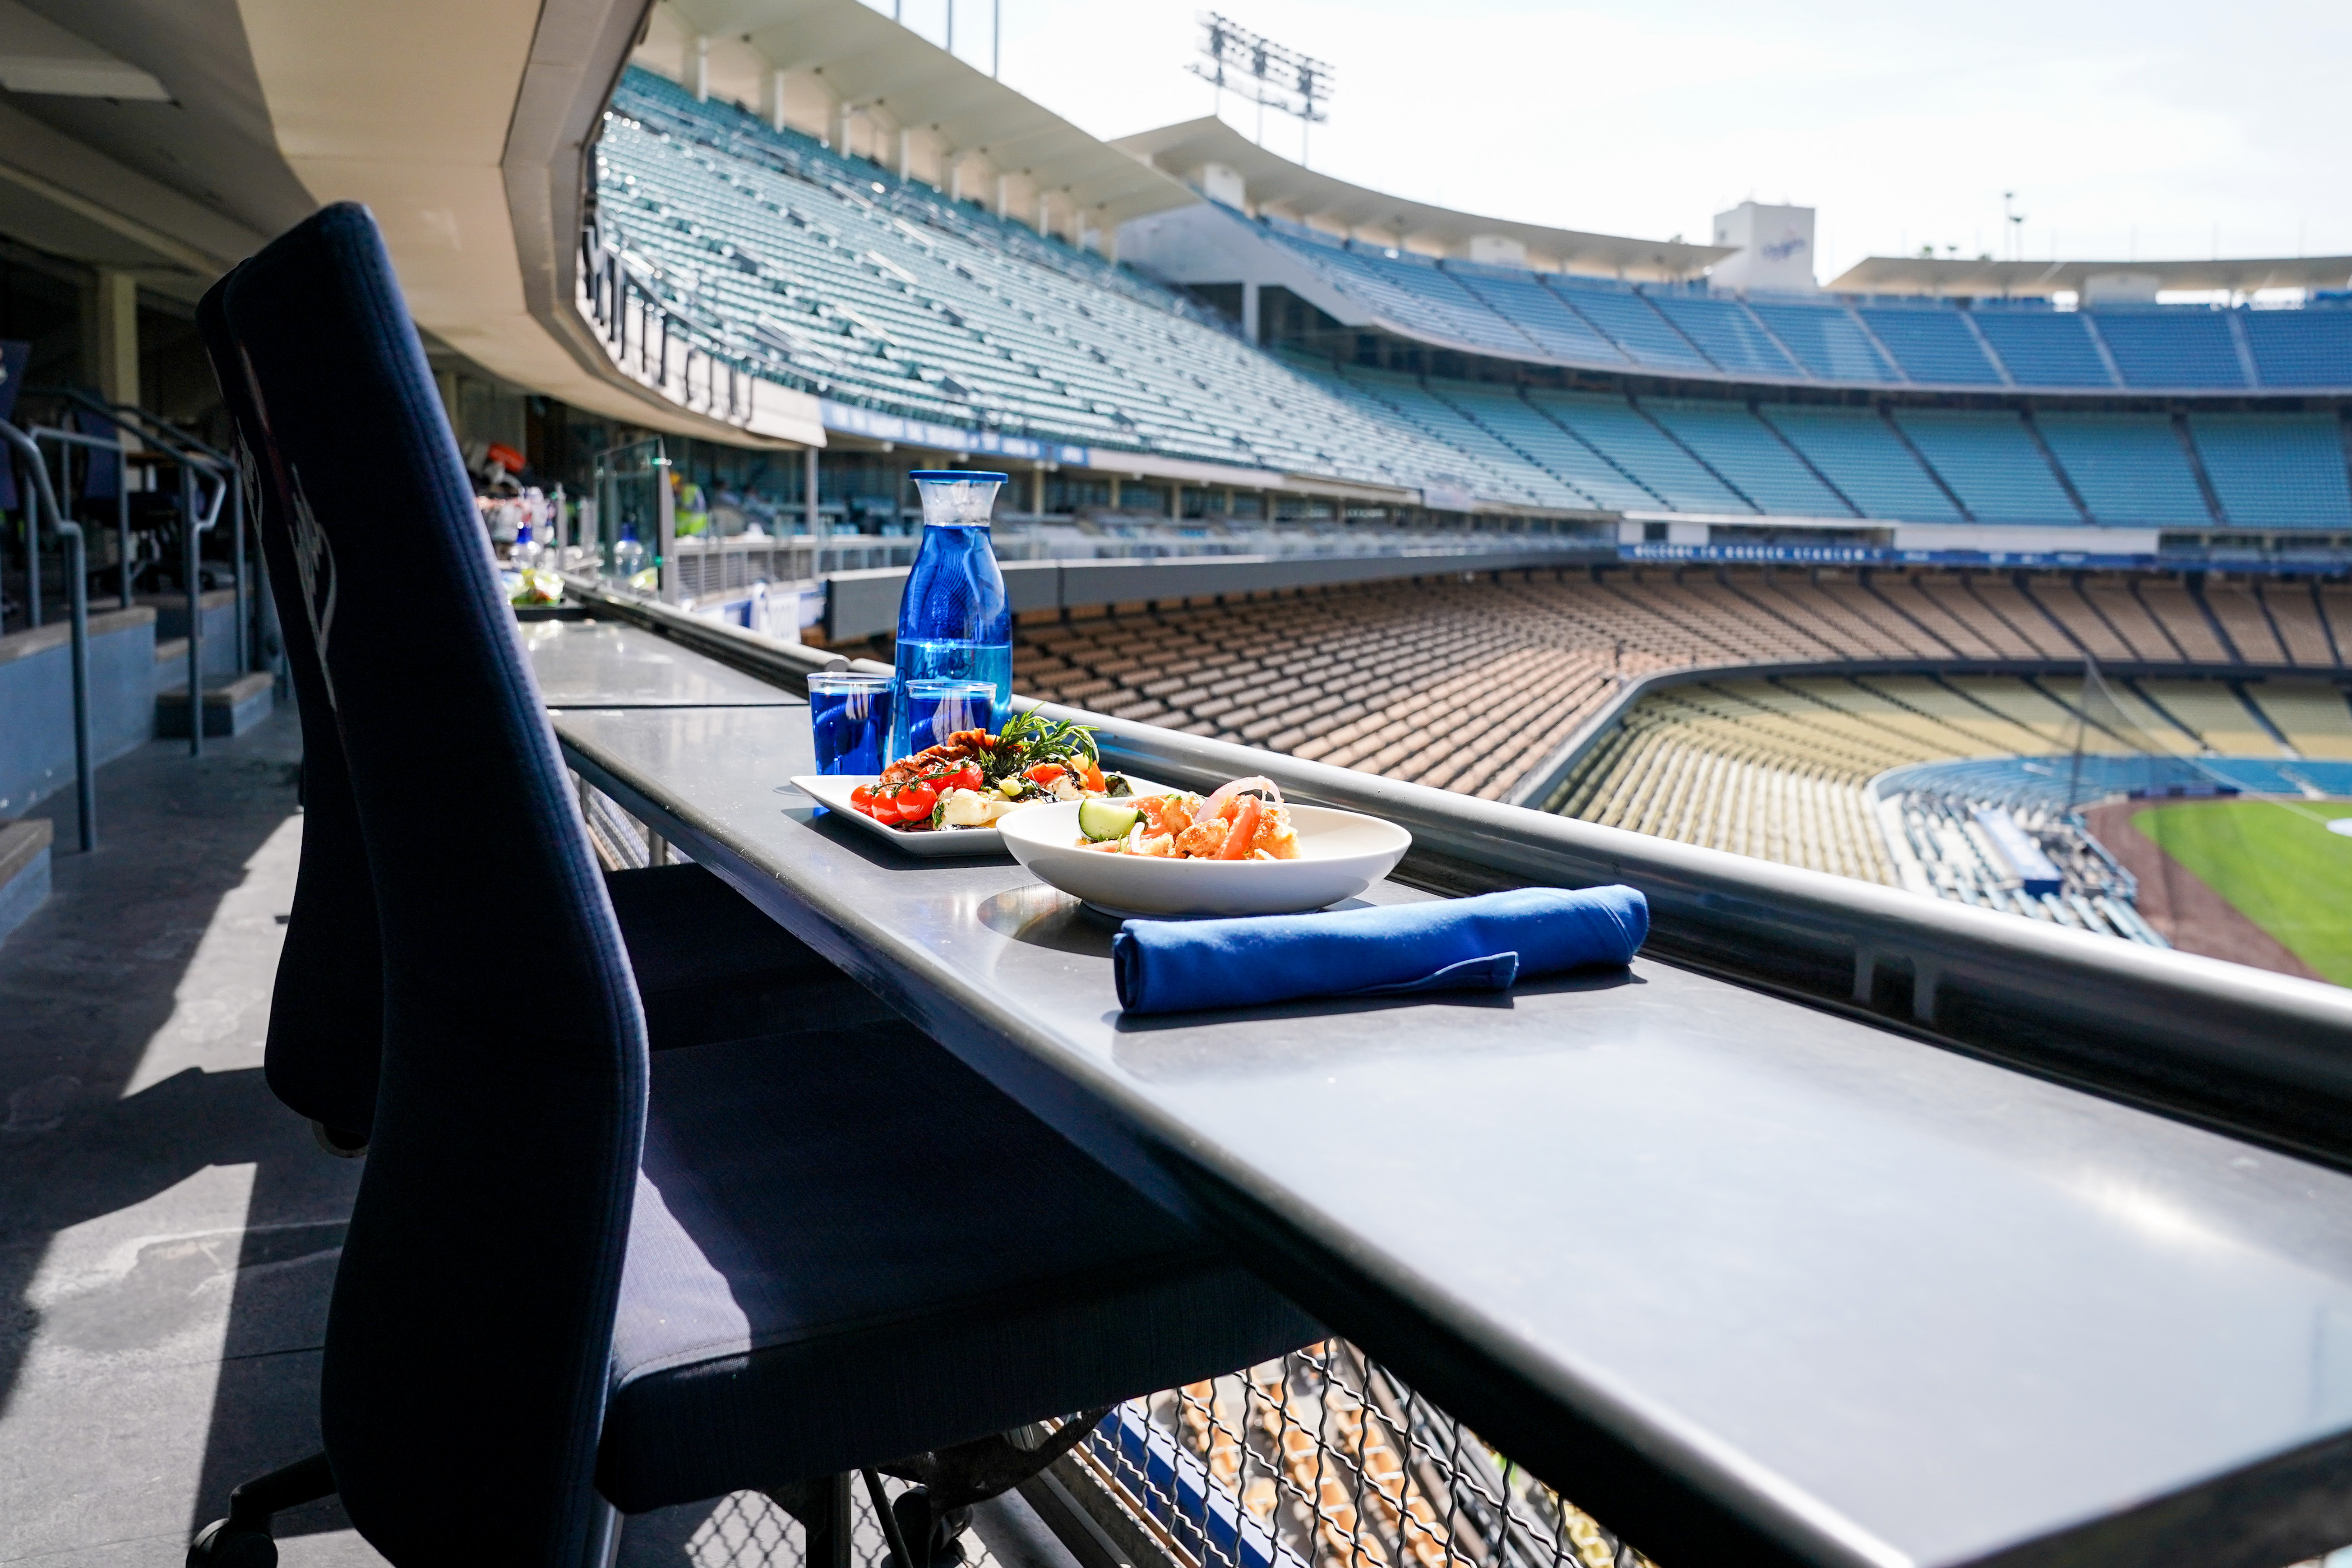 Step Inside: Dodger Stadium - Home of the Los Angeles Dodgers